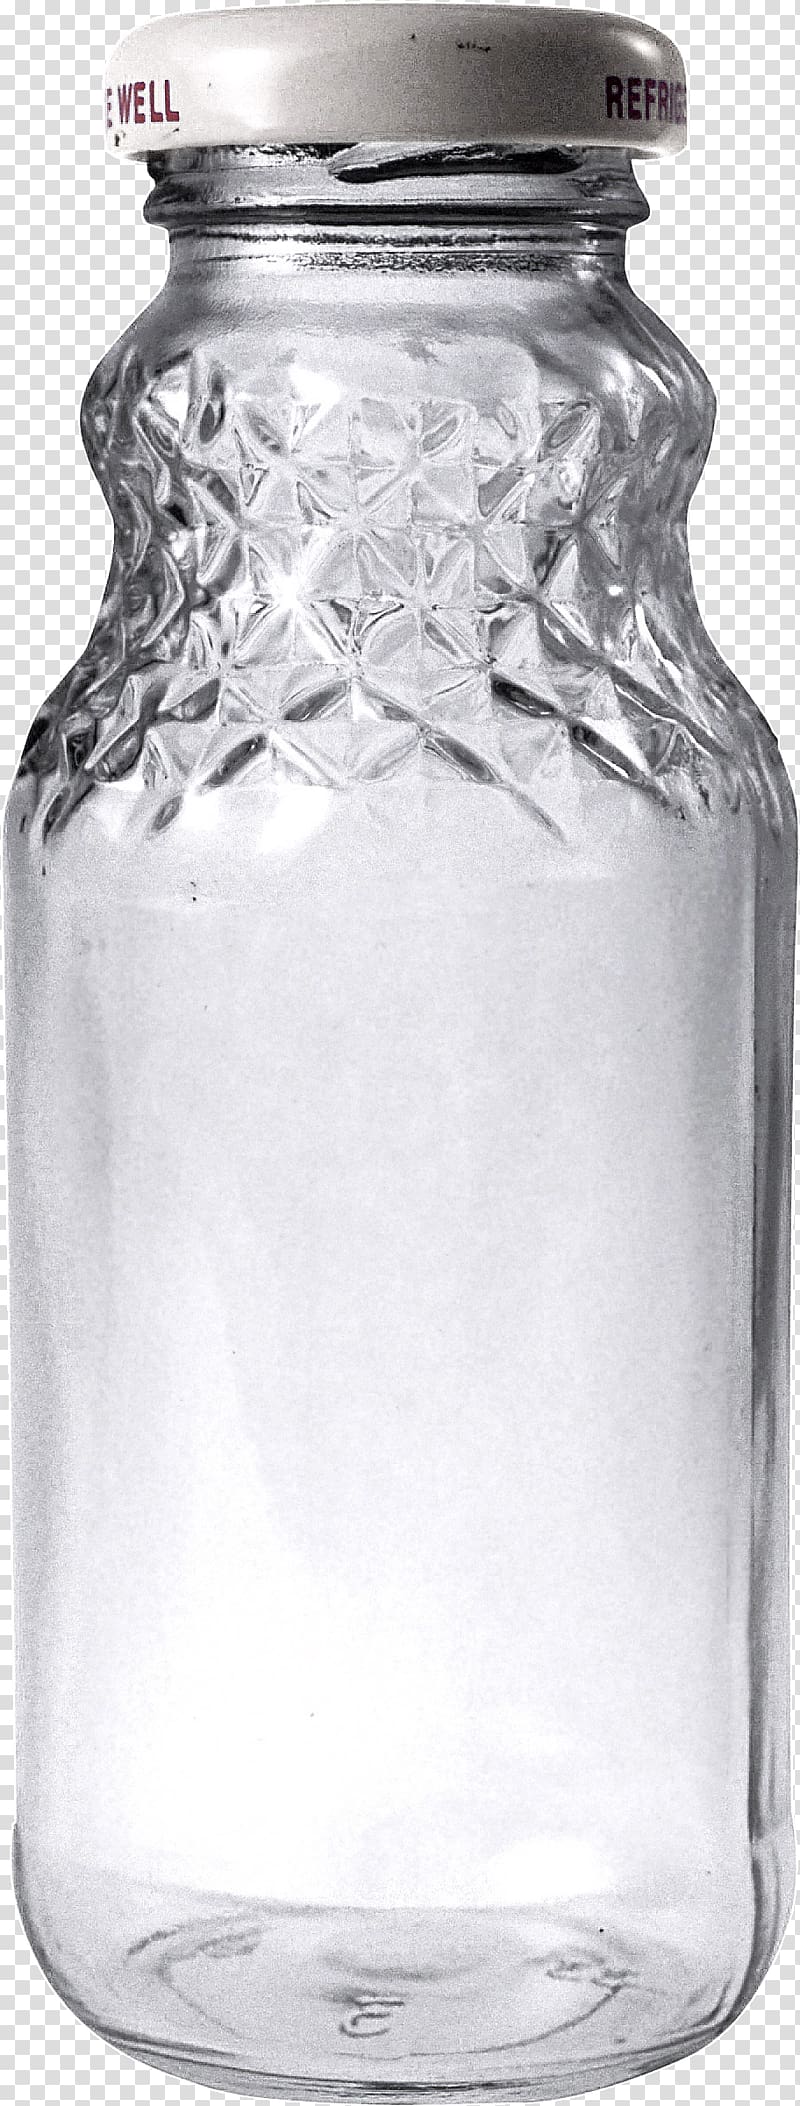 Juice Glass bottle Glass bottle, empty glass bottle transparent background PNG clipart